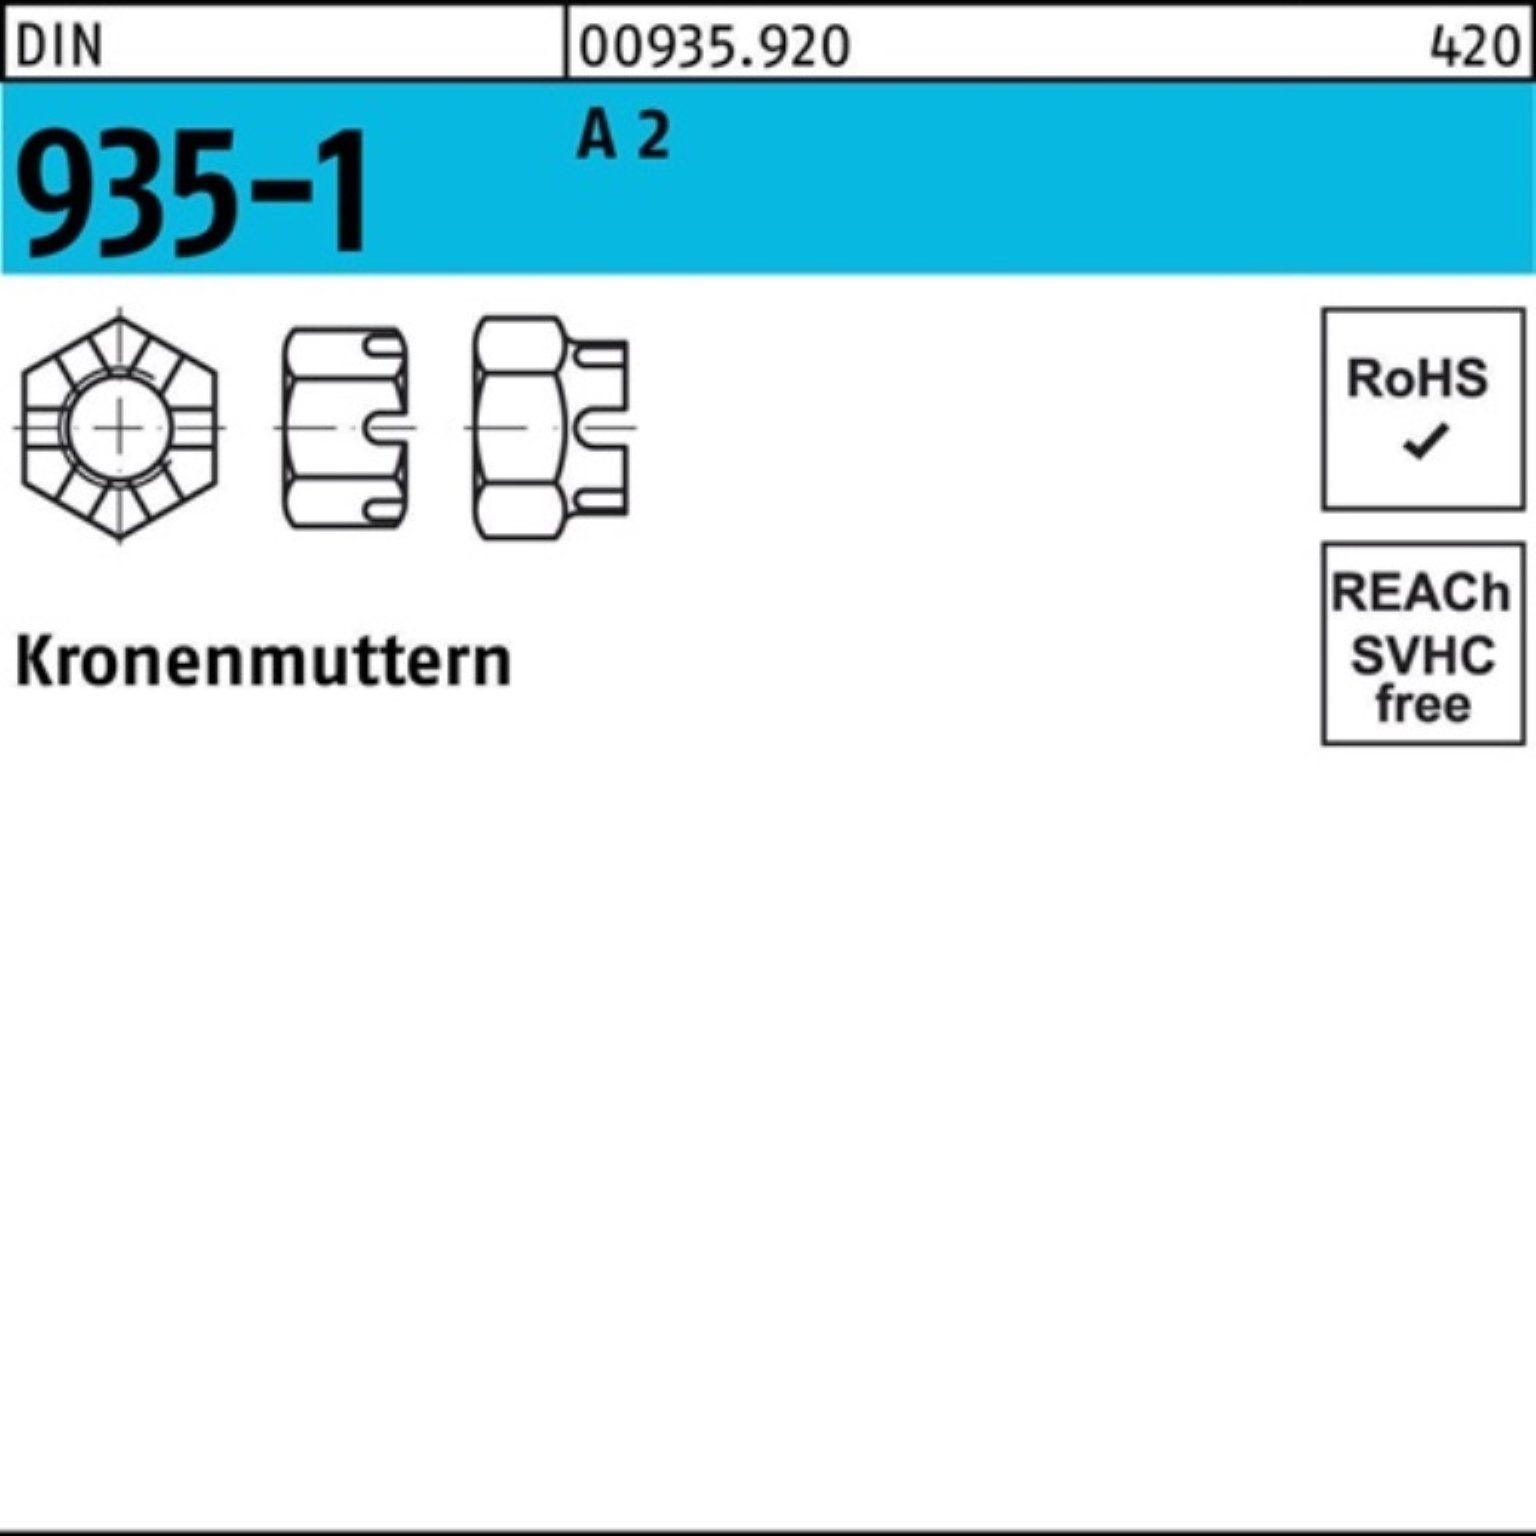 Reyher Kronenmutter Stück 2 935-1 25 100er 935-1 A DIN A Krone M8 2 Kronenmutter DIN Pack